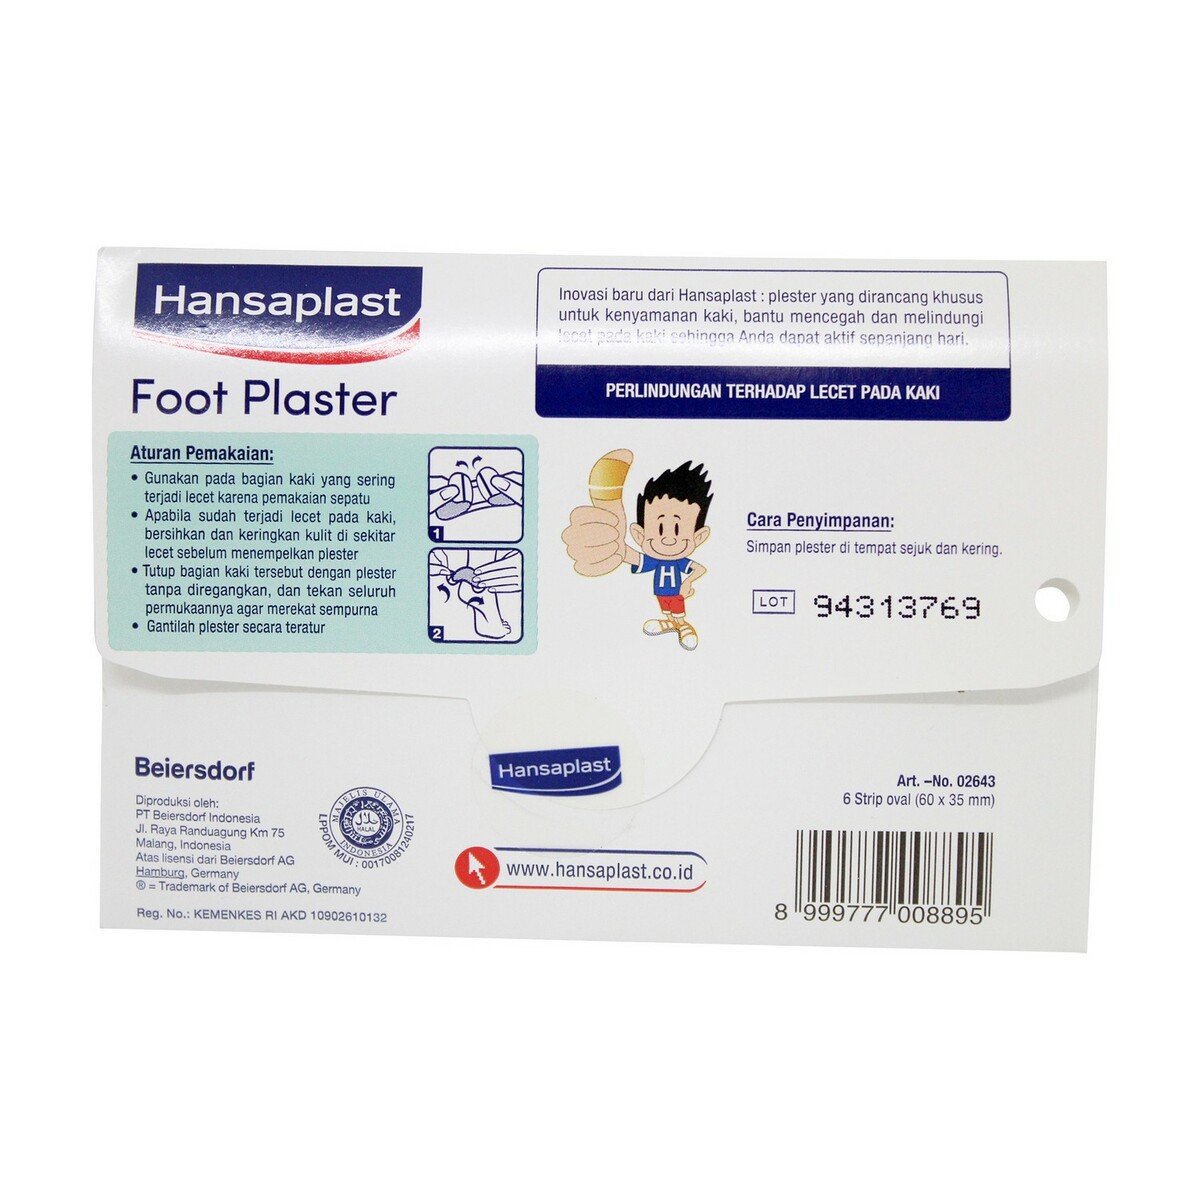 Hansaplast Foot Plaster 6pcs